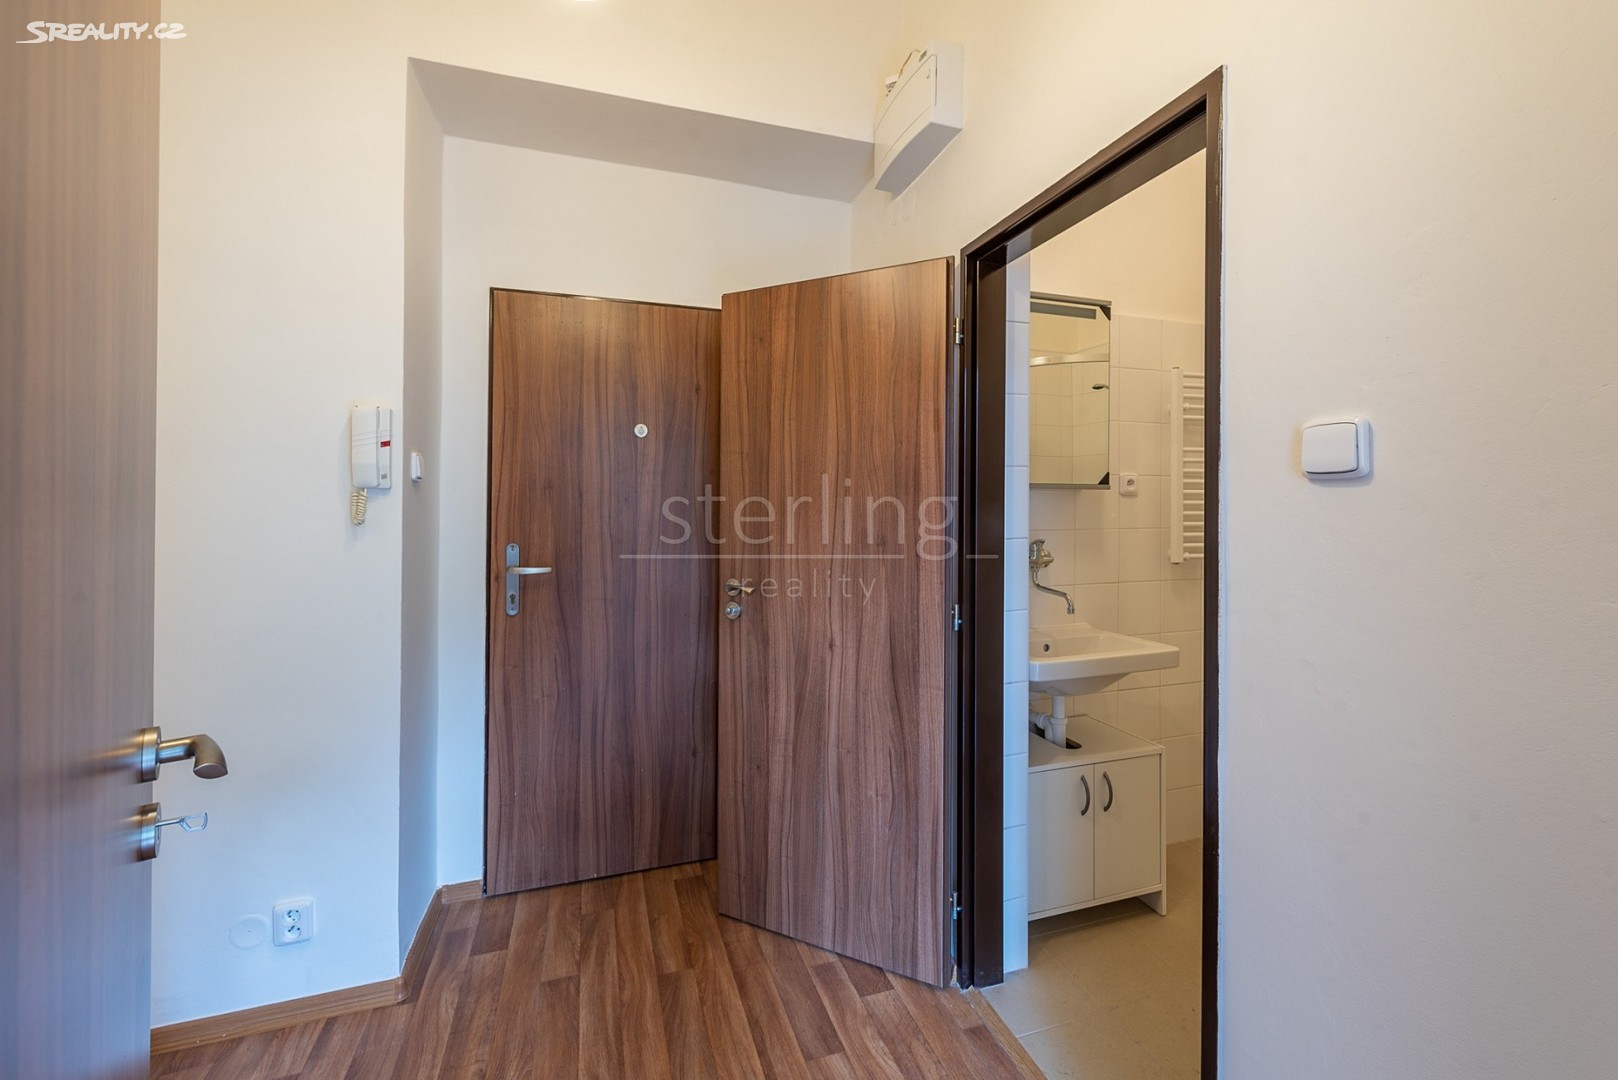 Pronájem bytu 1+1 46 m², Na Fidlovačce, Praha 4 - Nusle